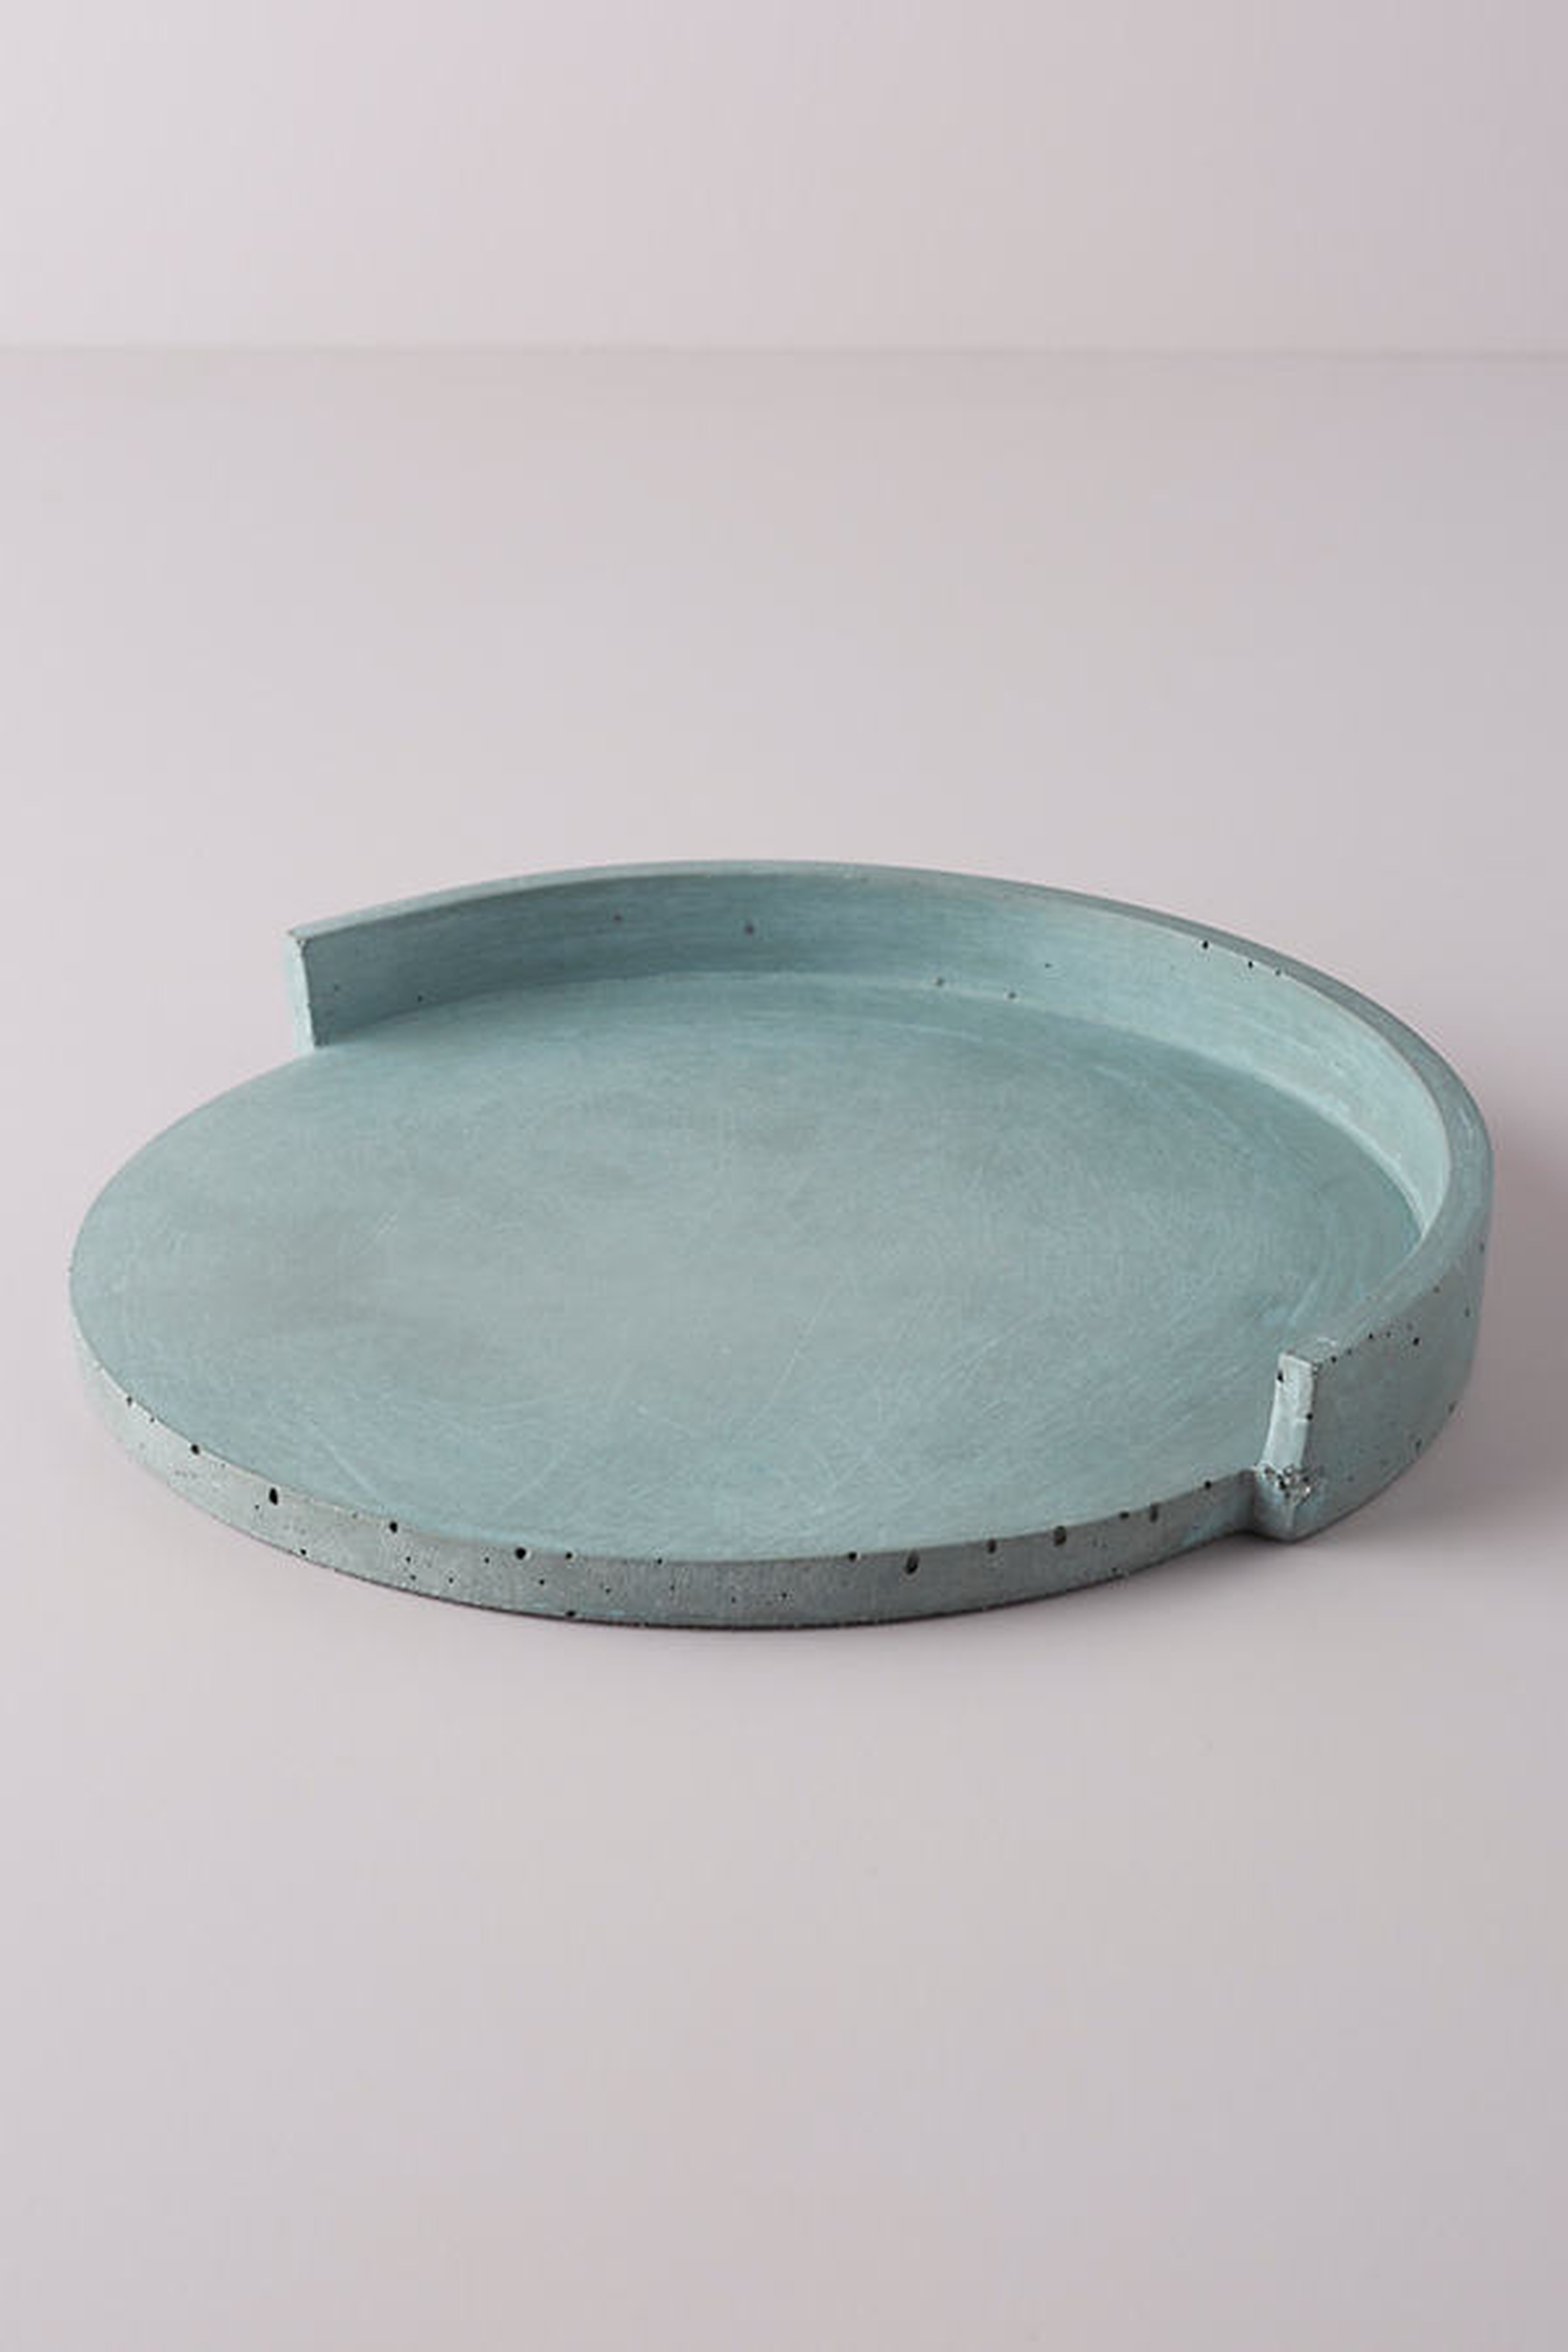 Alice Tacheny Concrete Slab Tray By Alice Tacheny in Blue - Anthropologie